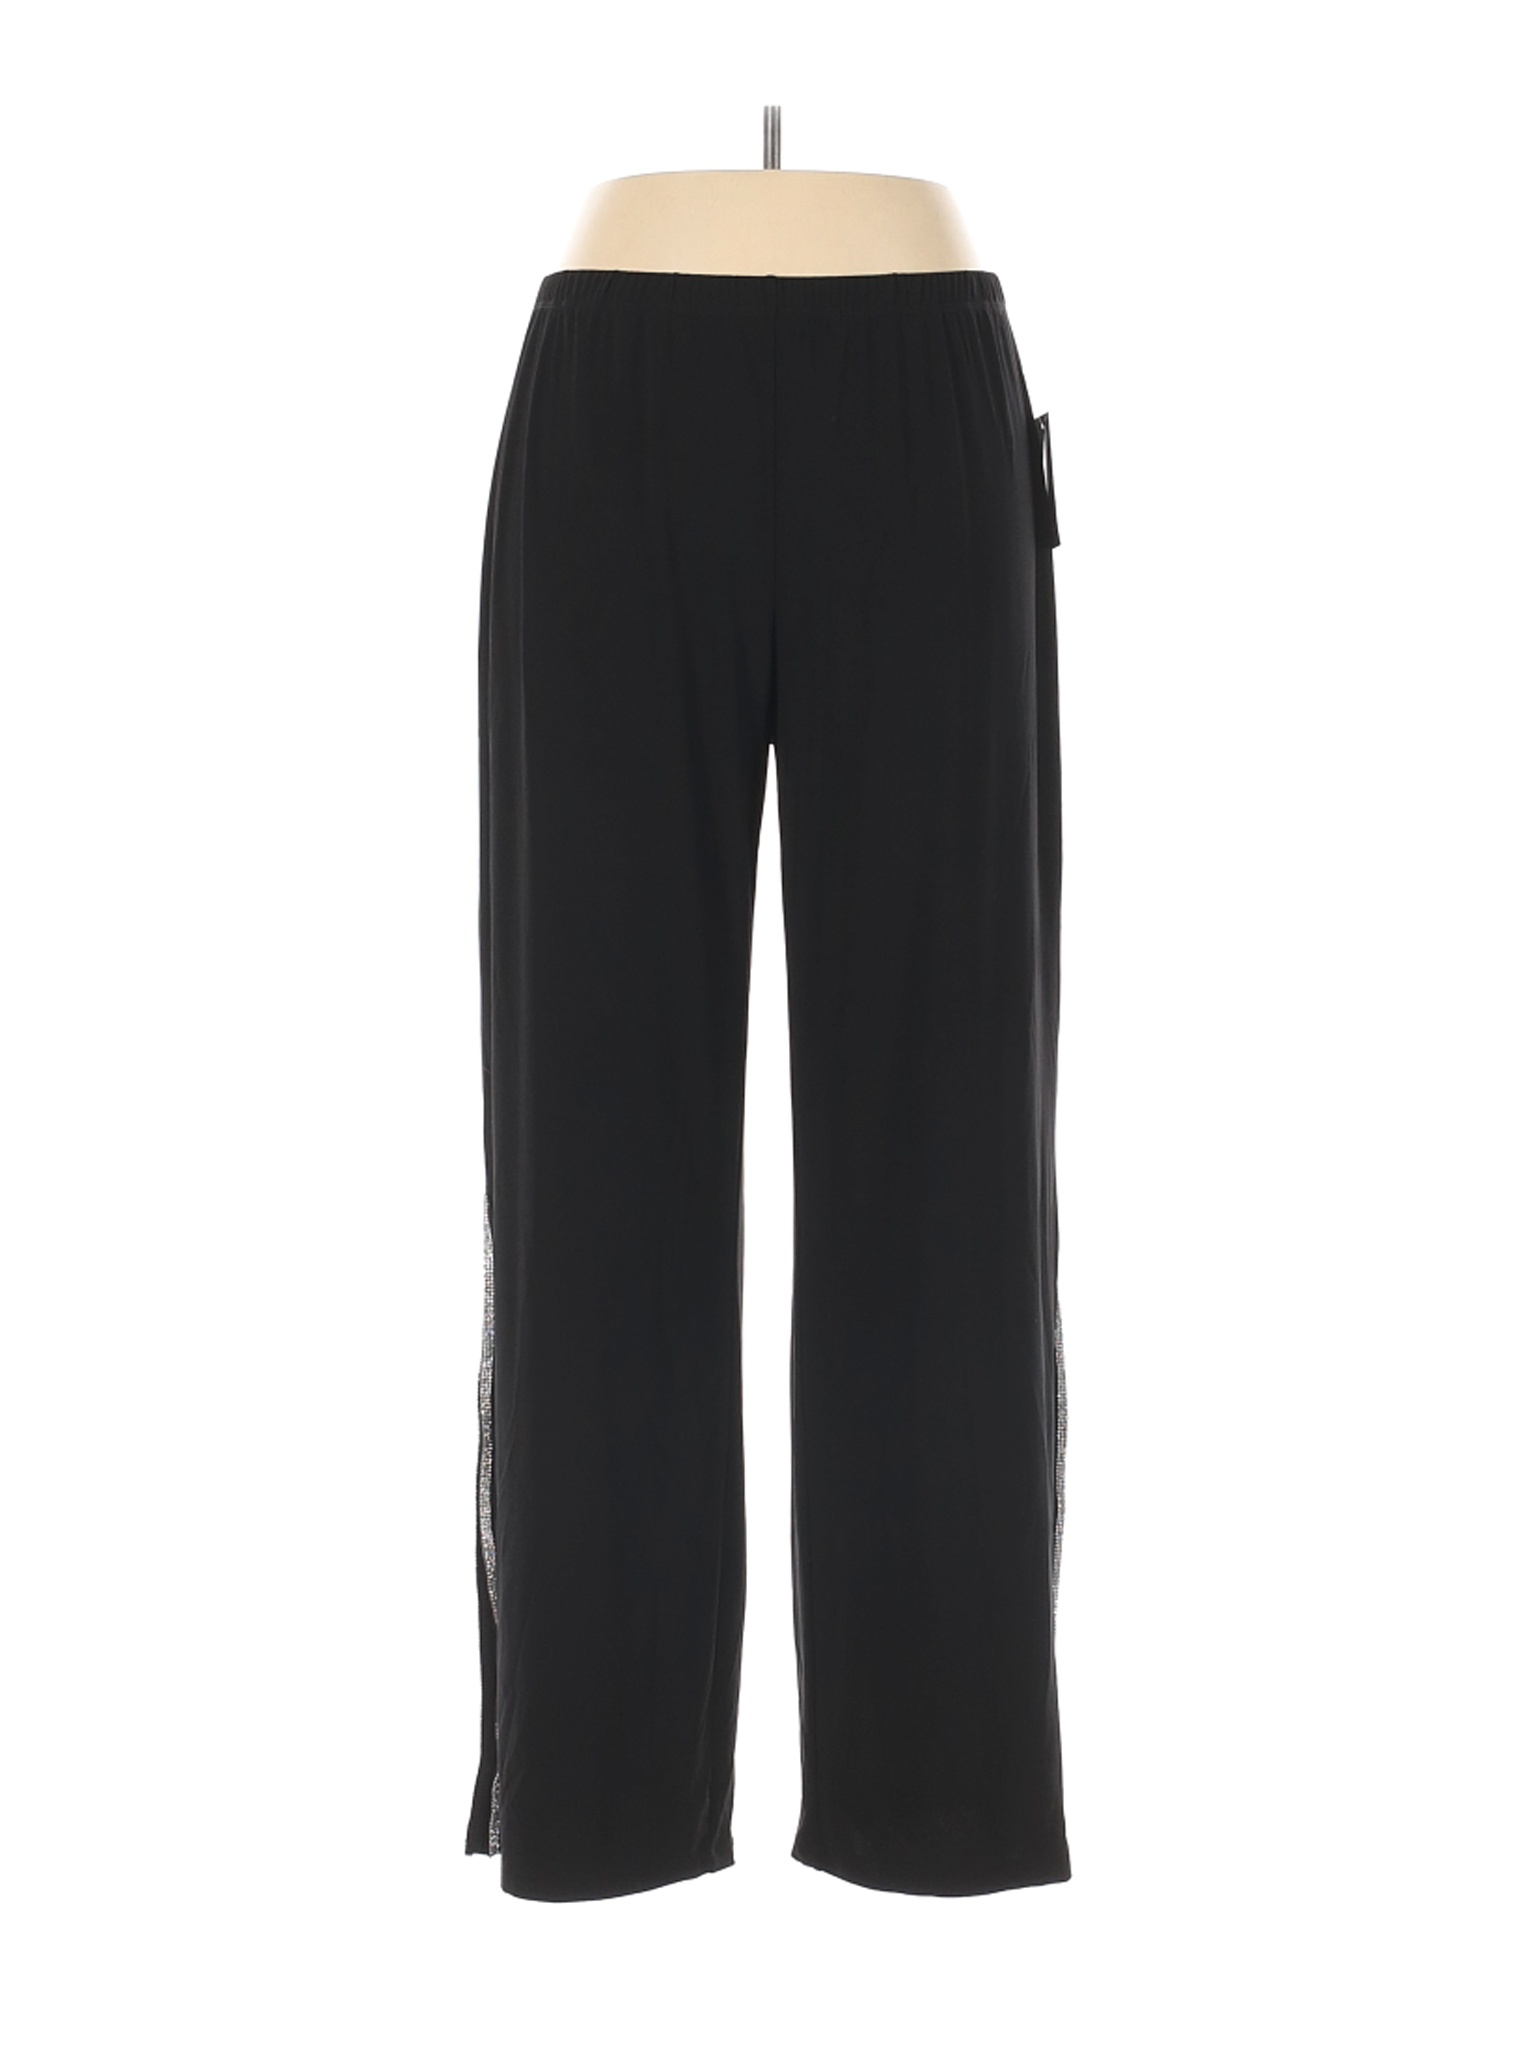 NWT MSK Women Black Casual Pants XL | eBay